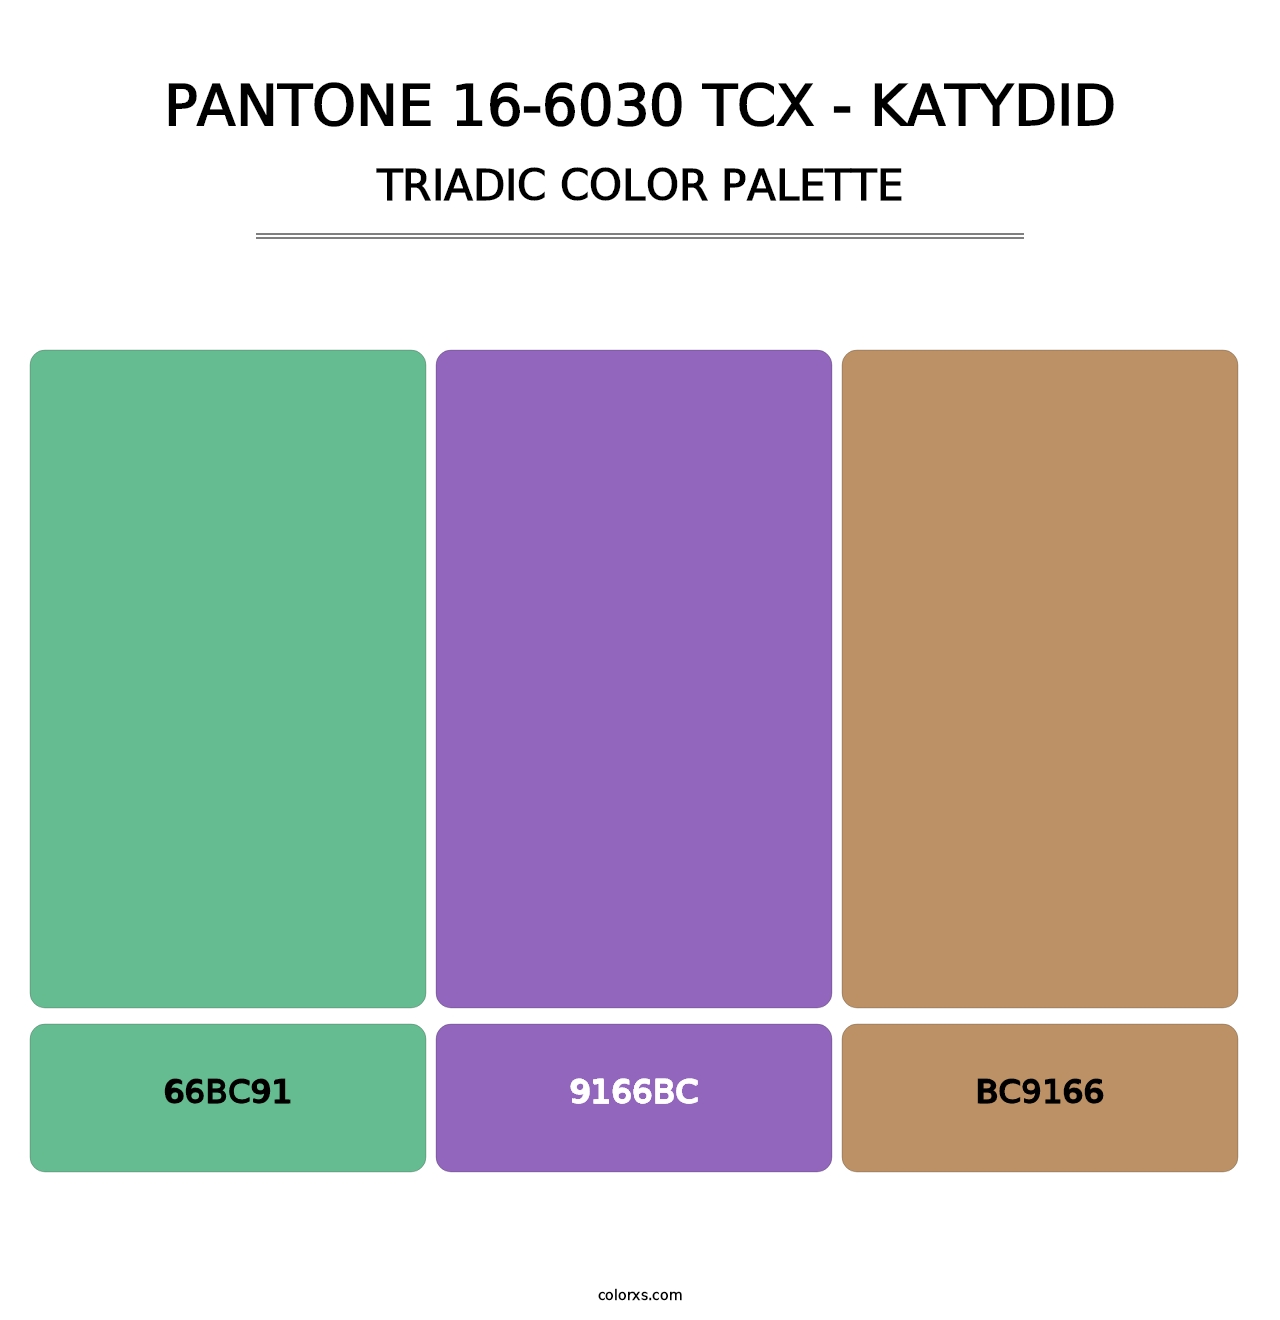 PANTONE 16-6030 TCX - Katydid - Triadic Color Palette